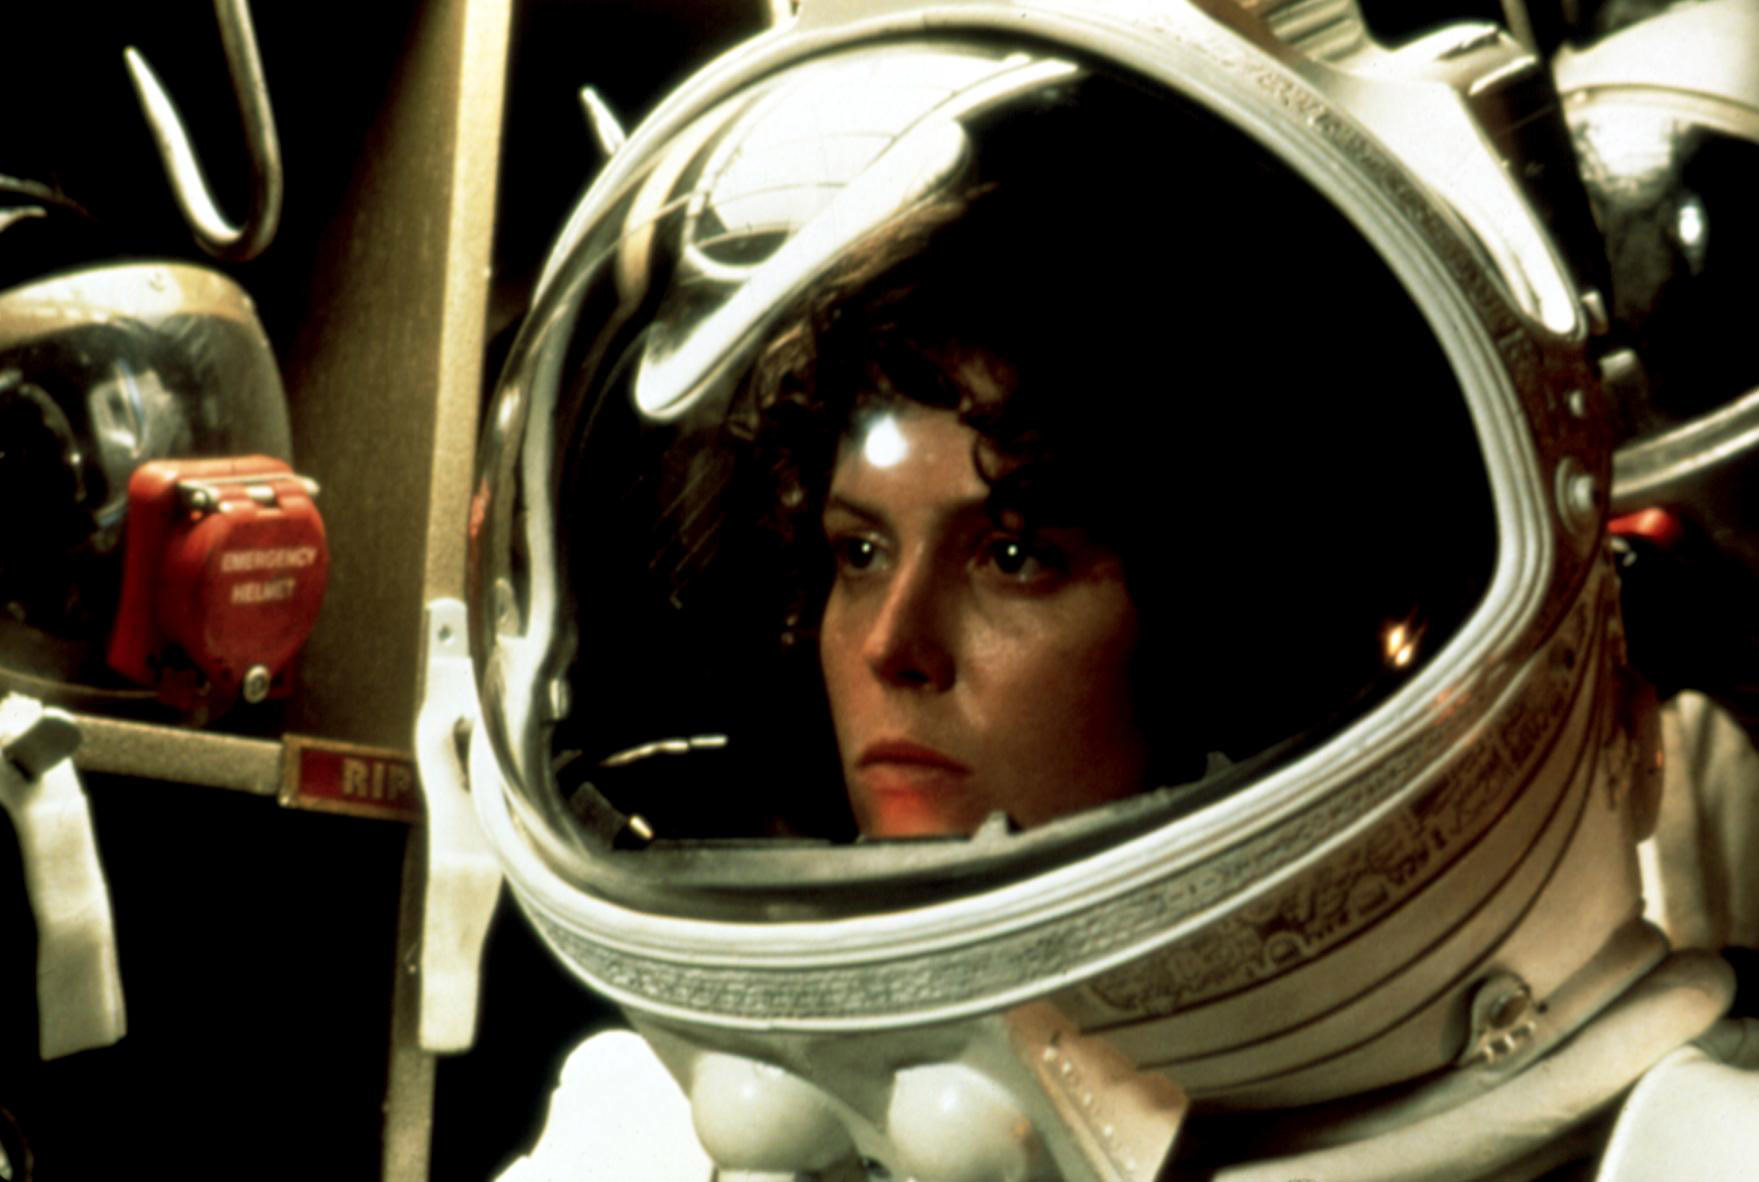 Sigourney Weaver in space gear